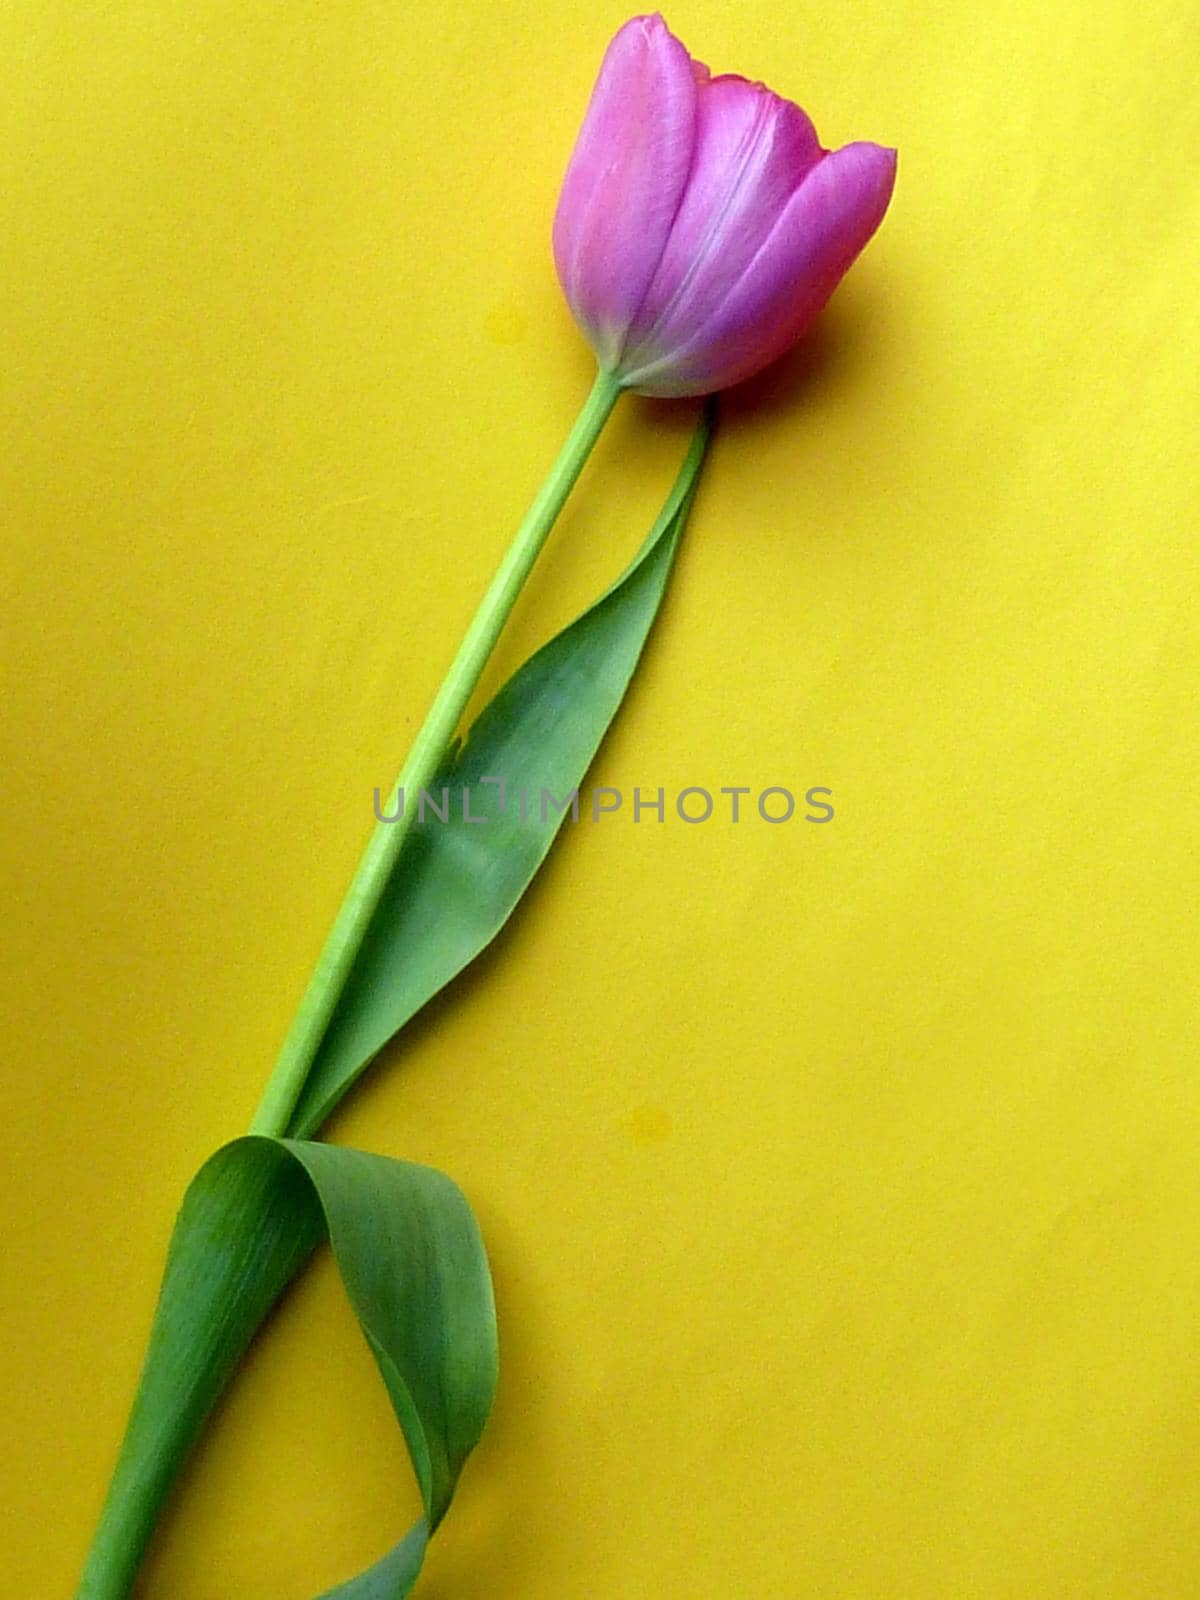 Single cut fresh tulip on yellow background by sanisra